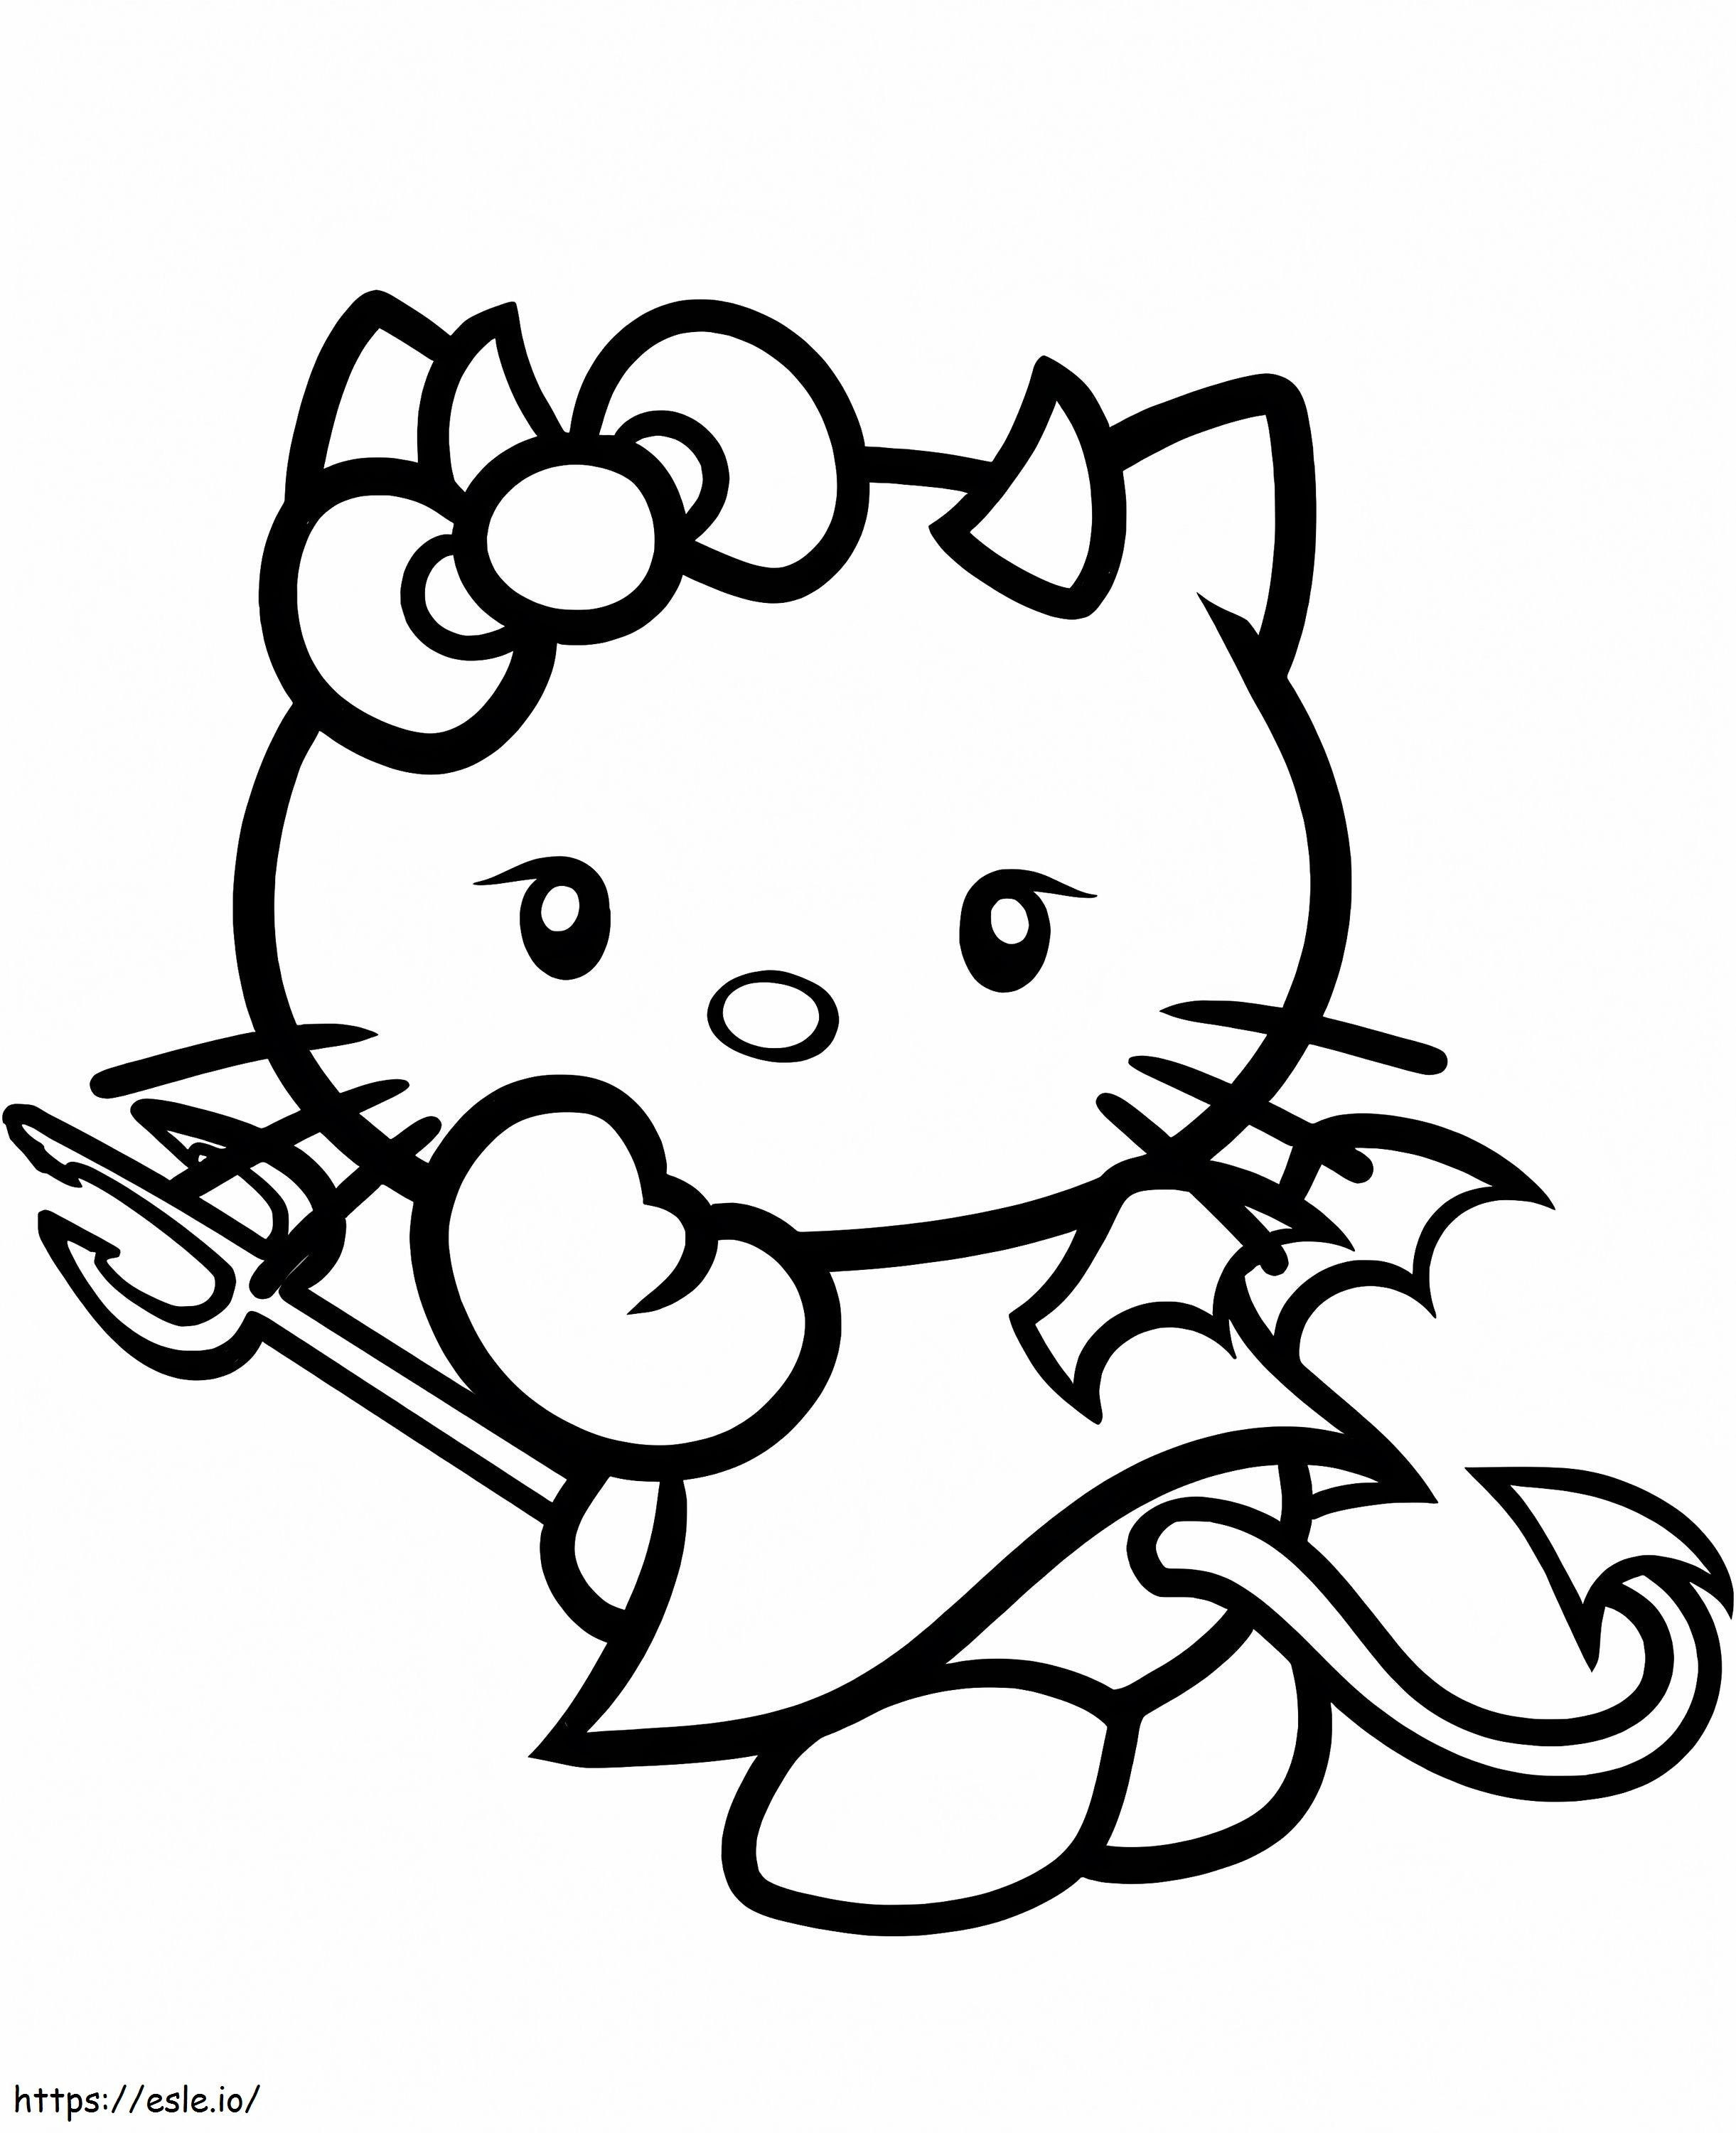 Diablo Hello Kitty coloring page